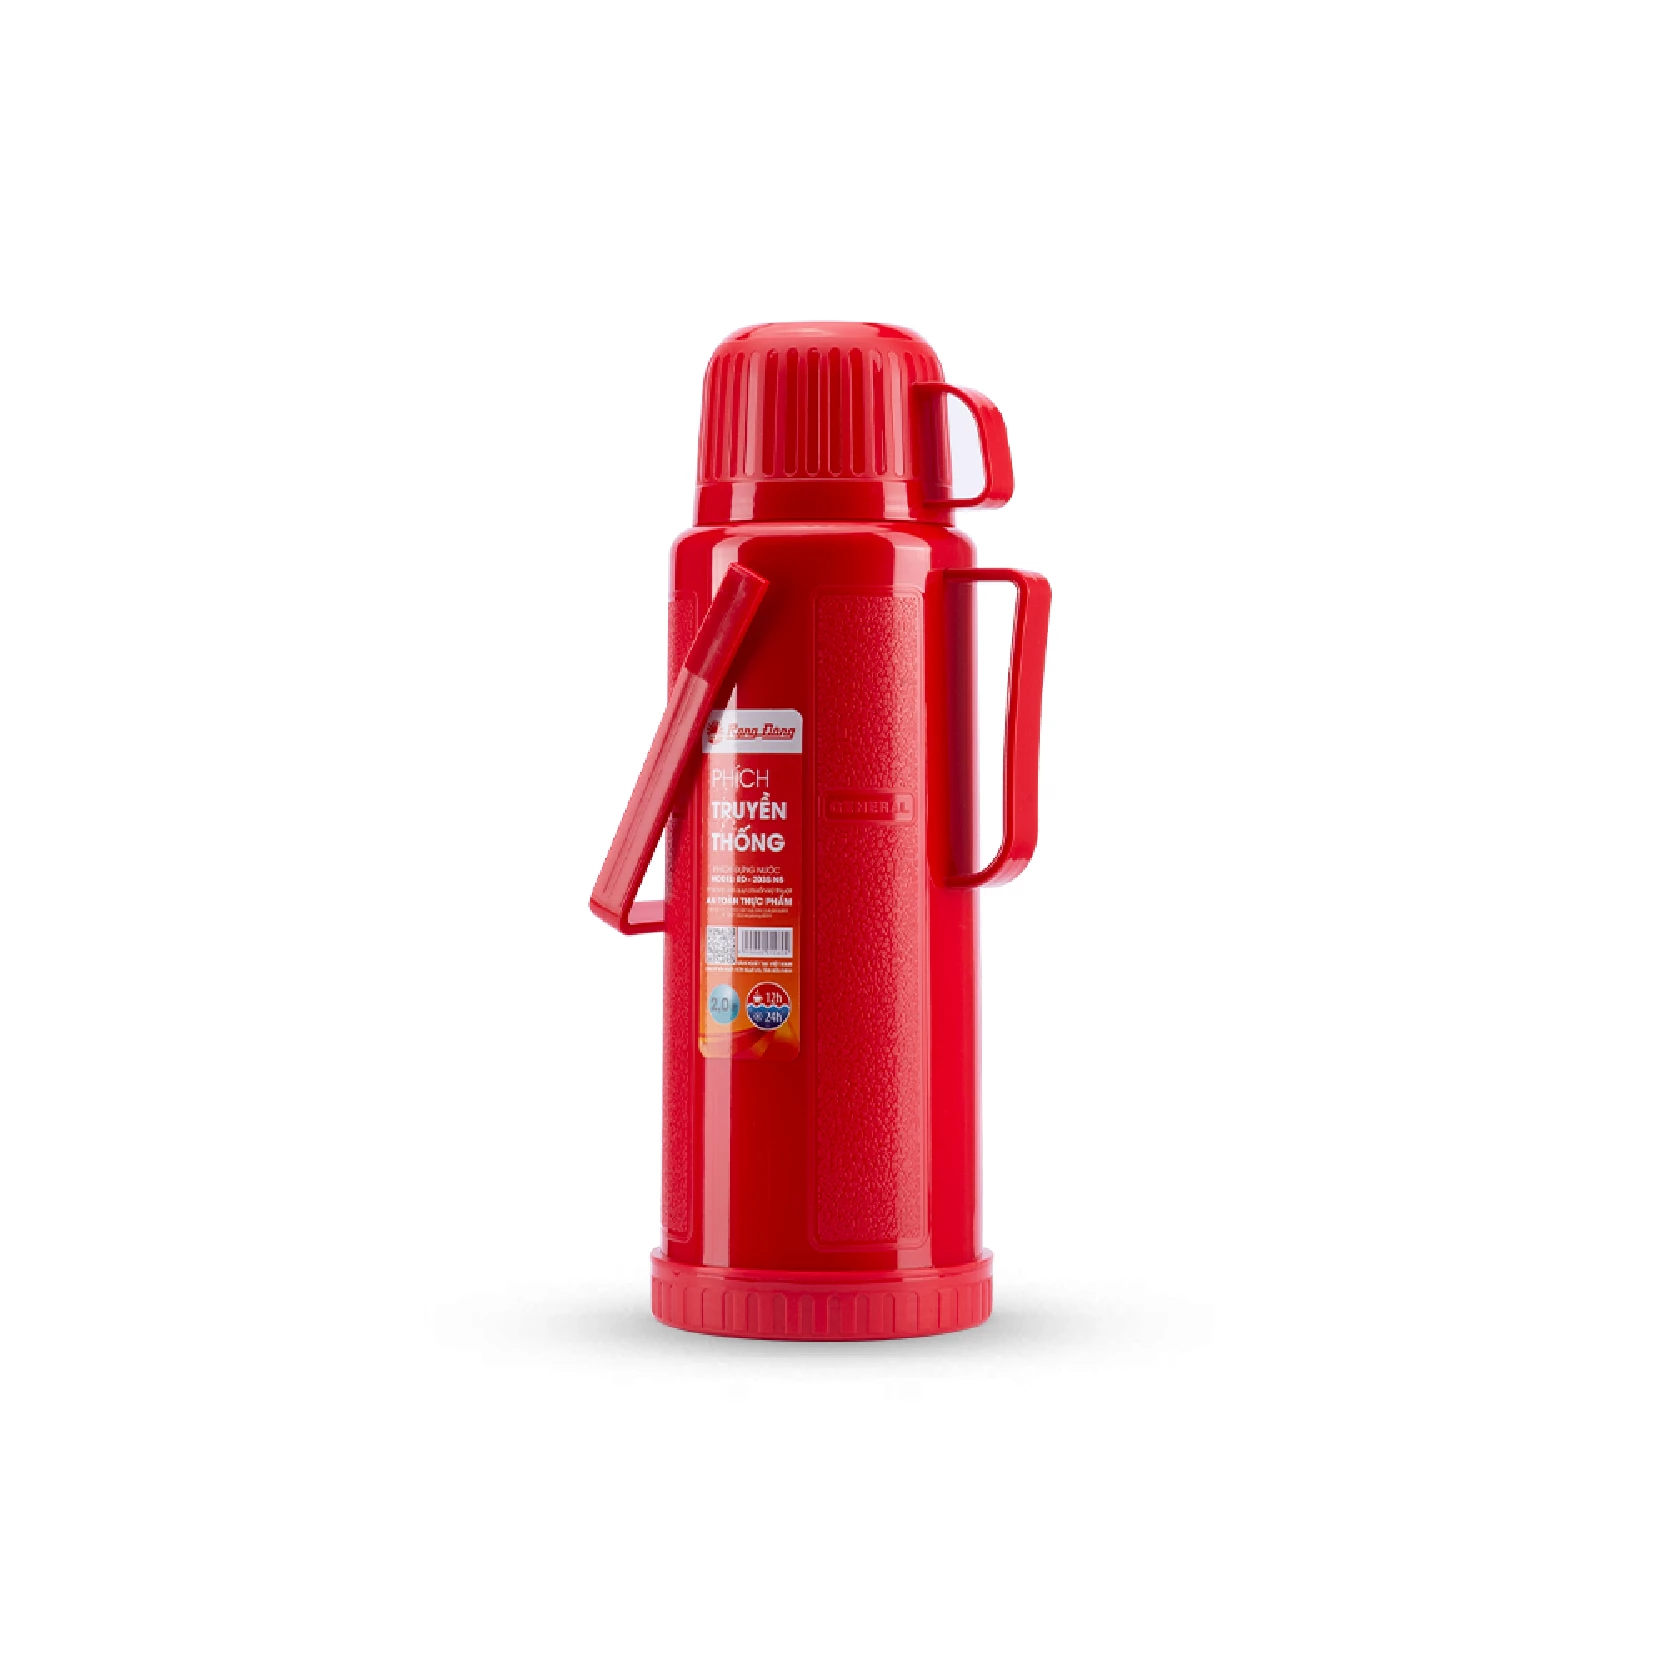 Big Size Vacuum Flasks - RD-2035 N5